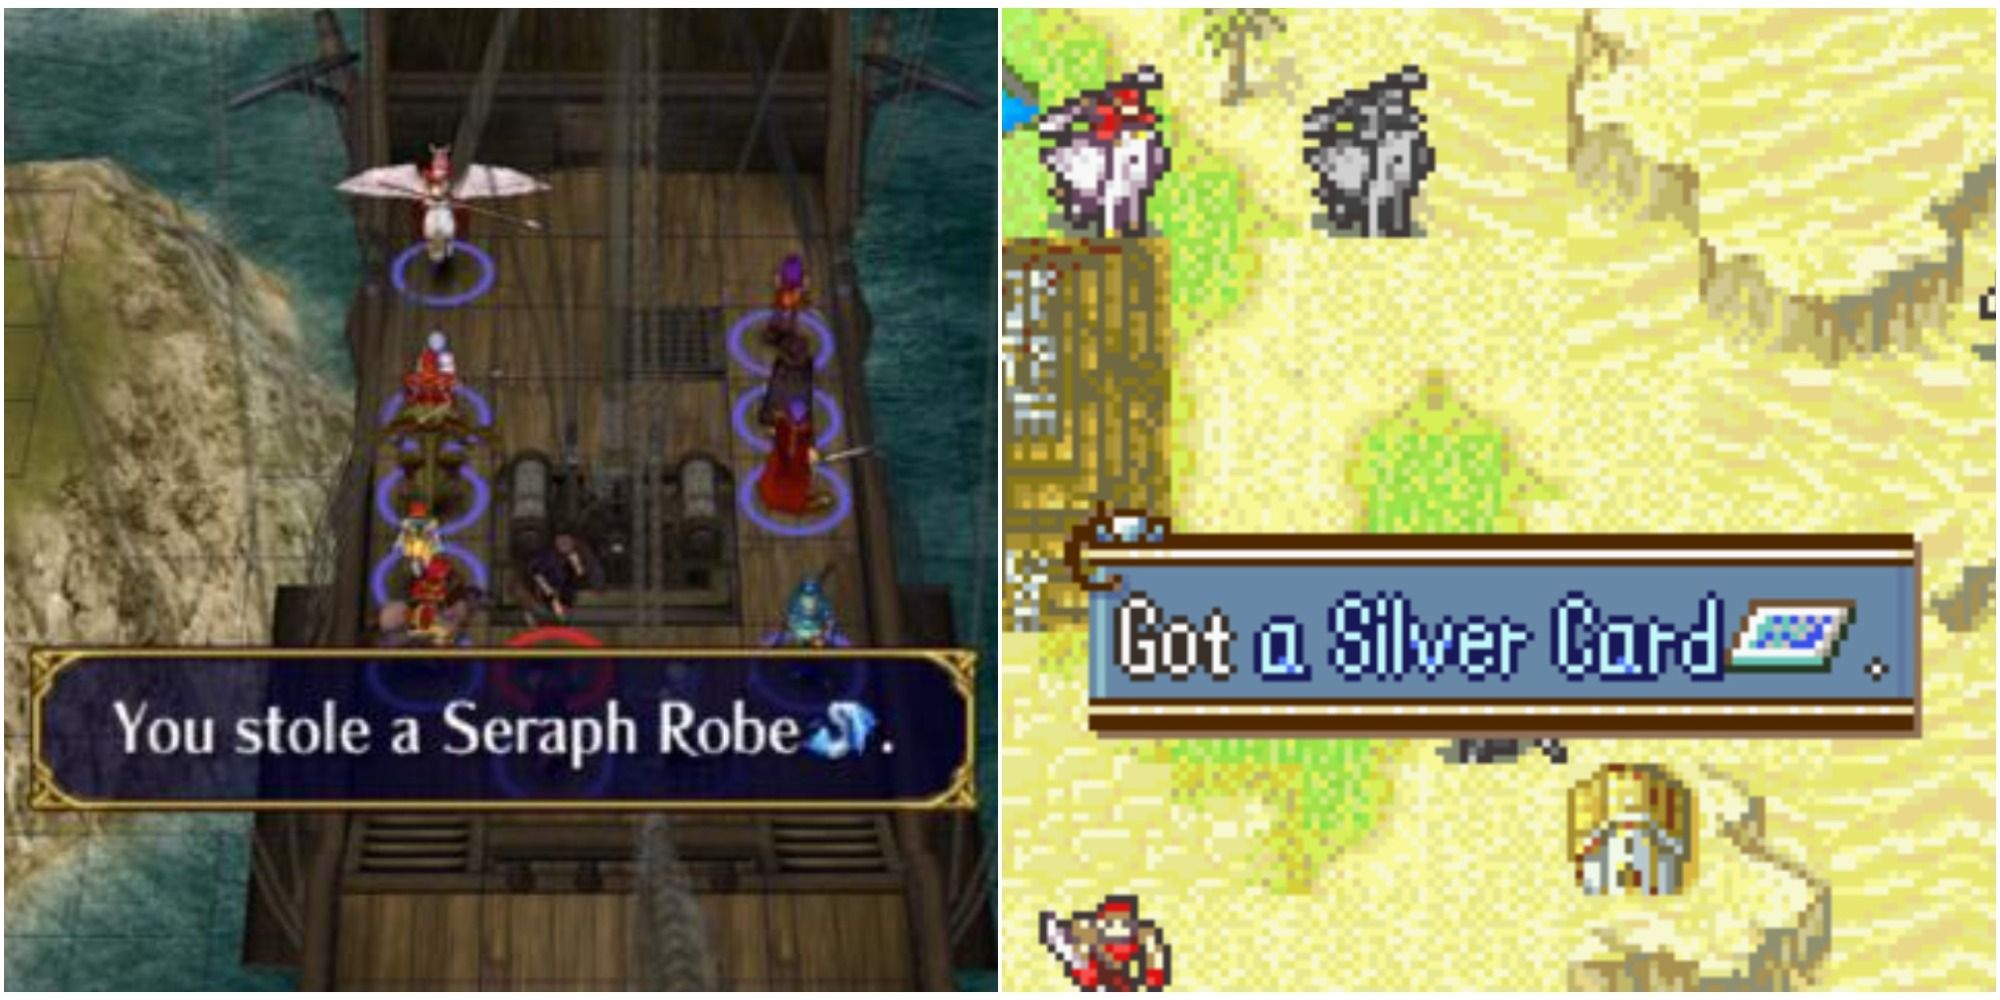 fire emblem item screenshots seraph robe and silver card